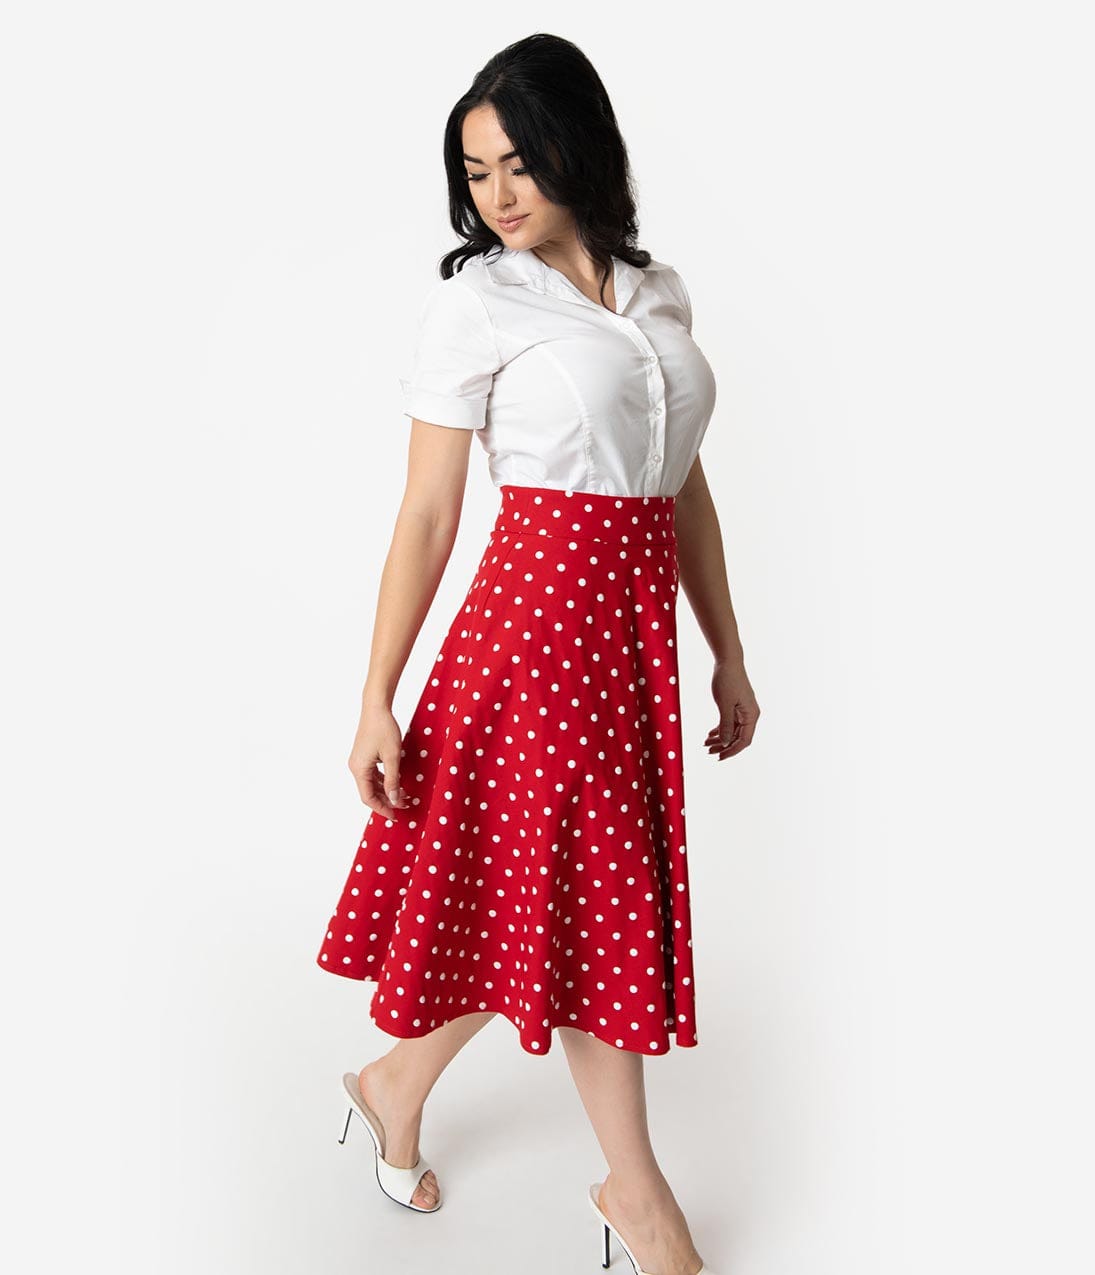 Unique Vintage Retro Style Red & White Polka Dot High Waist Vivien Swing Skirt